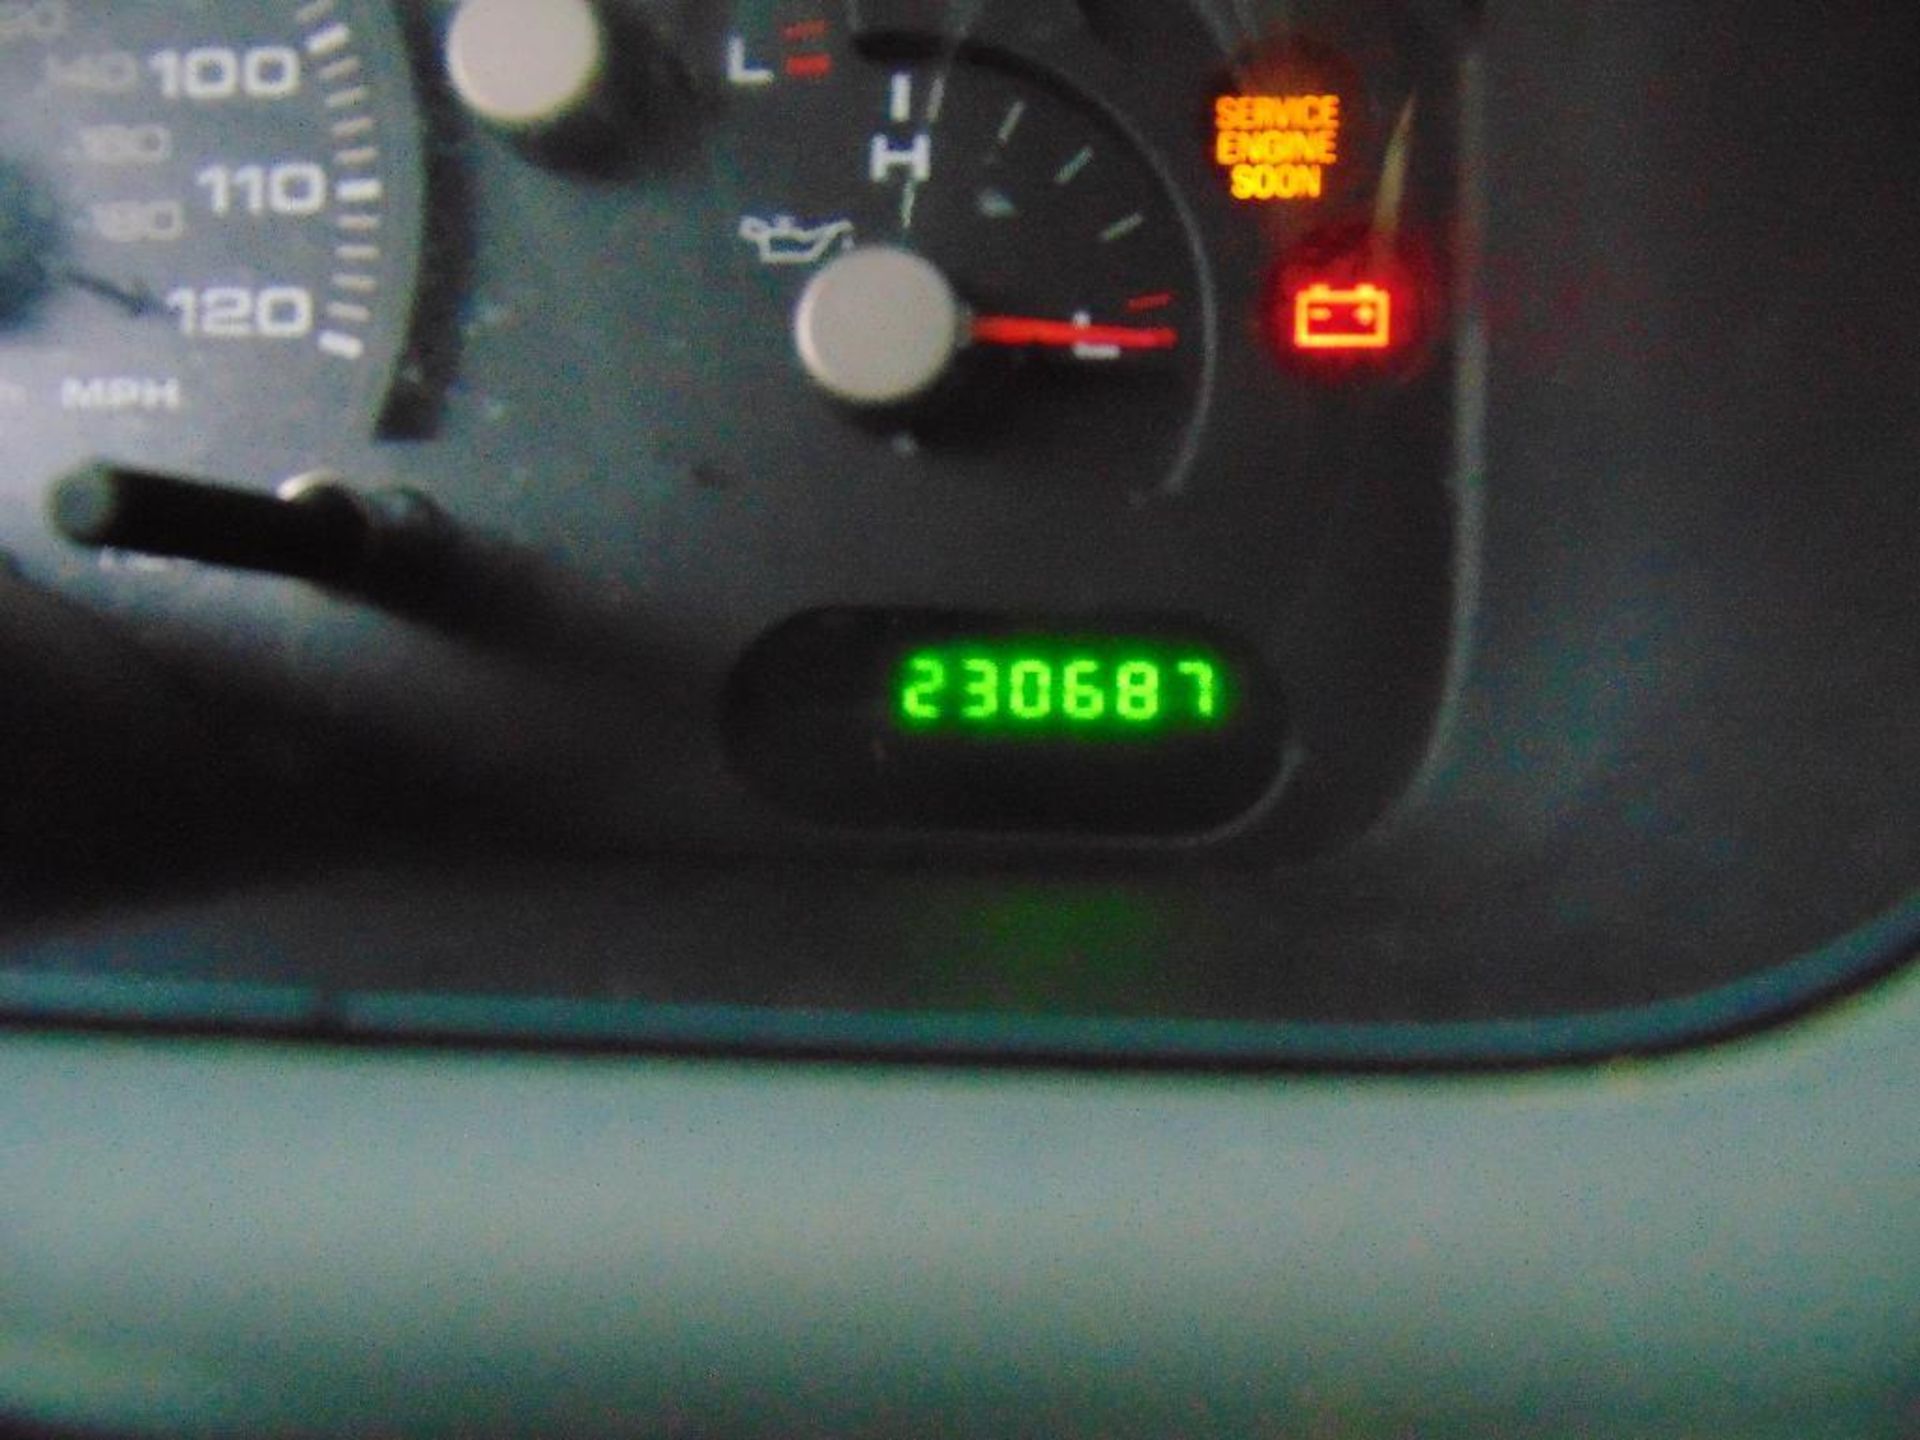 2003 Ford Explorer SUV, s/n 1fmzu62k03zb43085, v6 eng, auto trans, od reads 230687 miles - Image 9 of 10